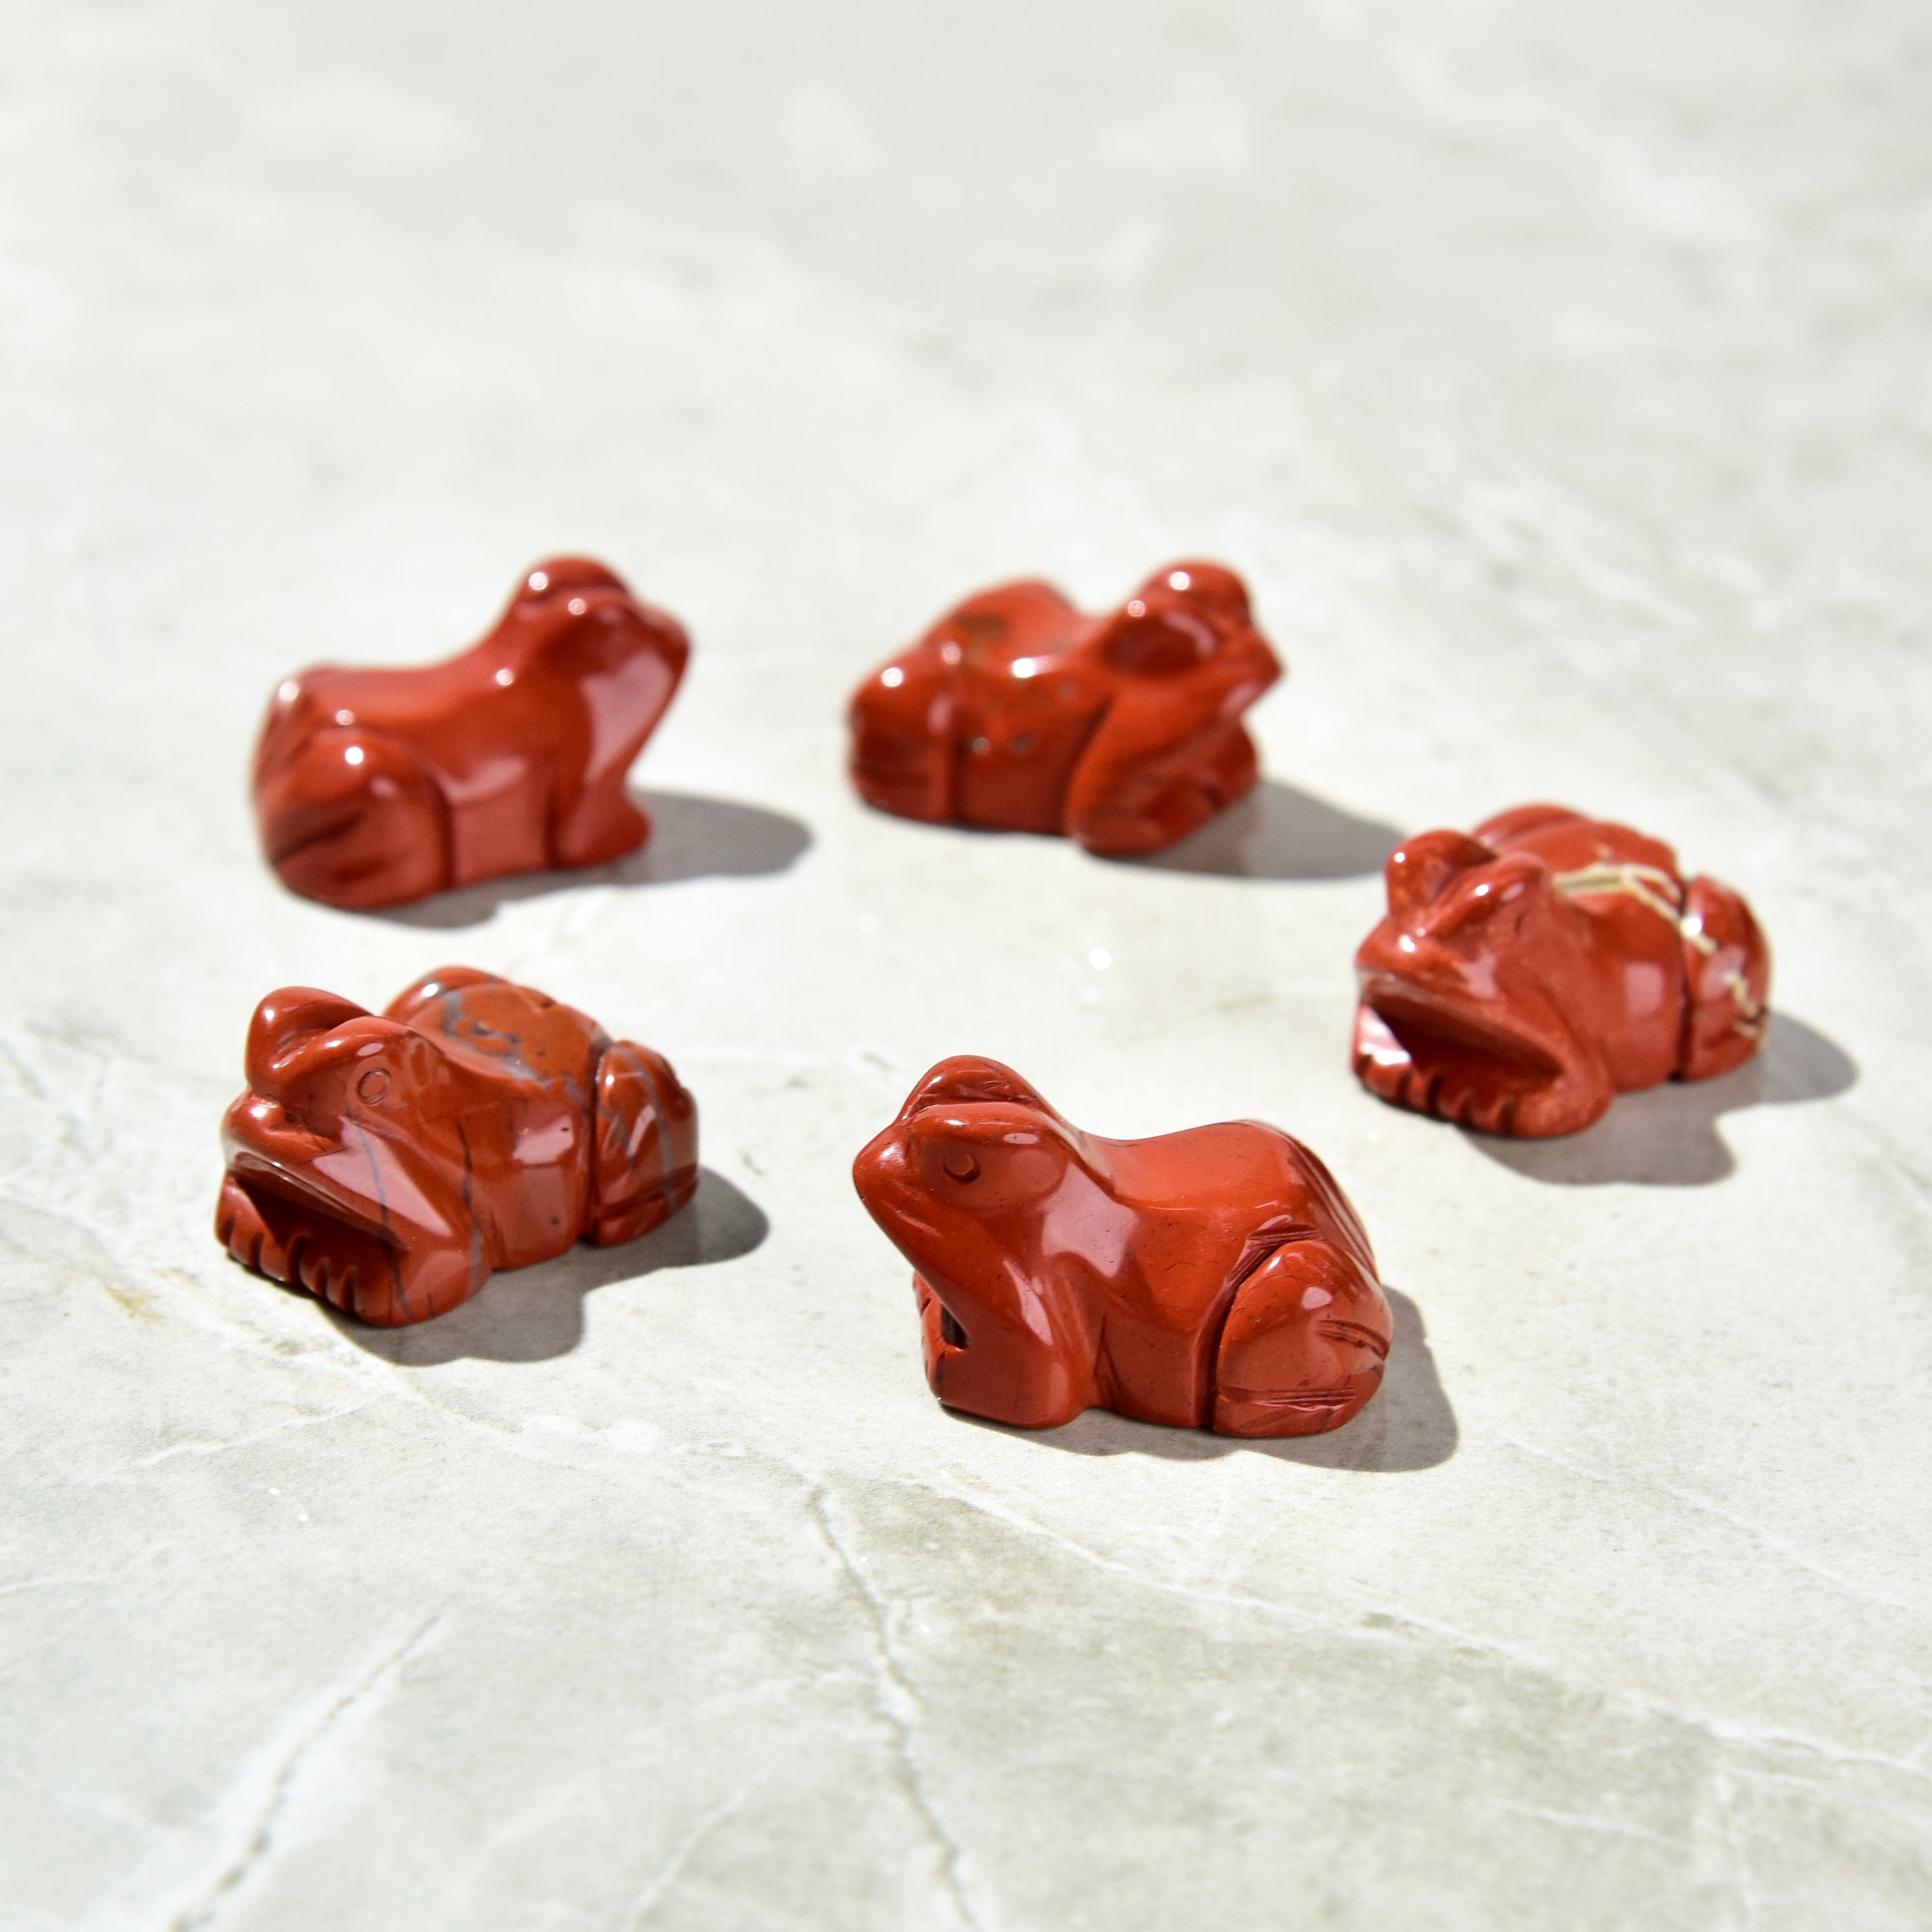 KALIFANO Gemstone Carvings 1.5" Red Jasper Frog Natural Gemstone Carving CV9-F-RJ